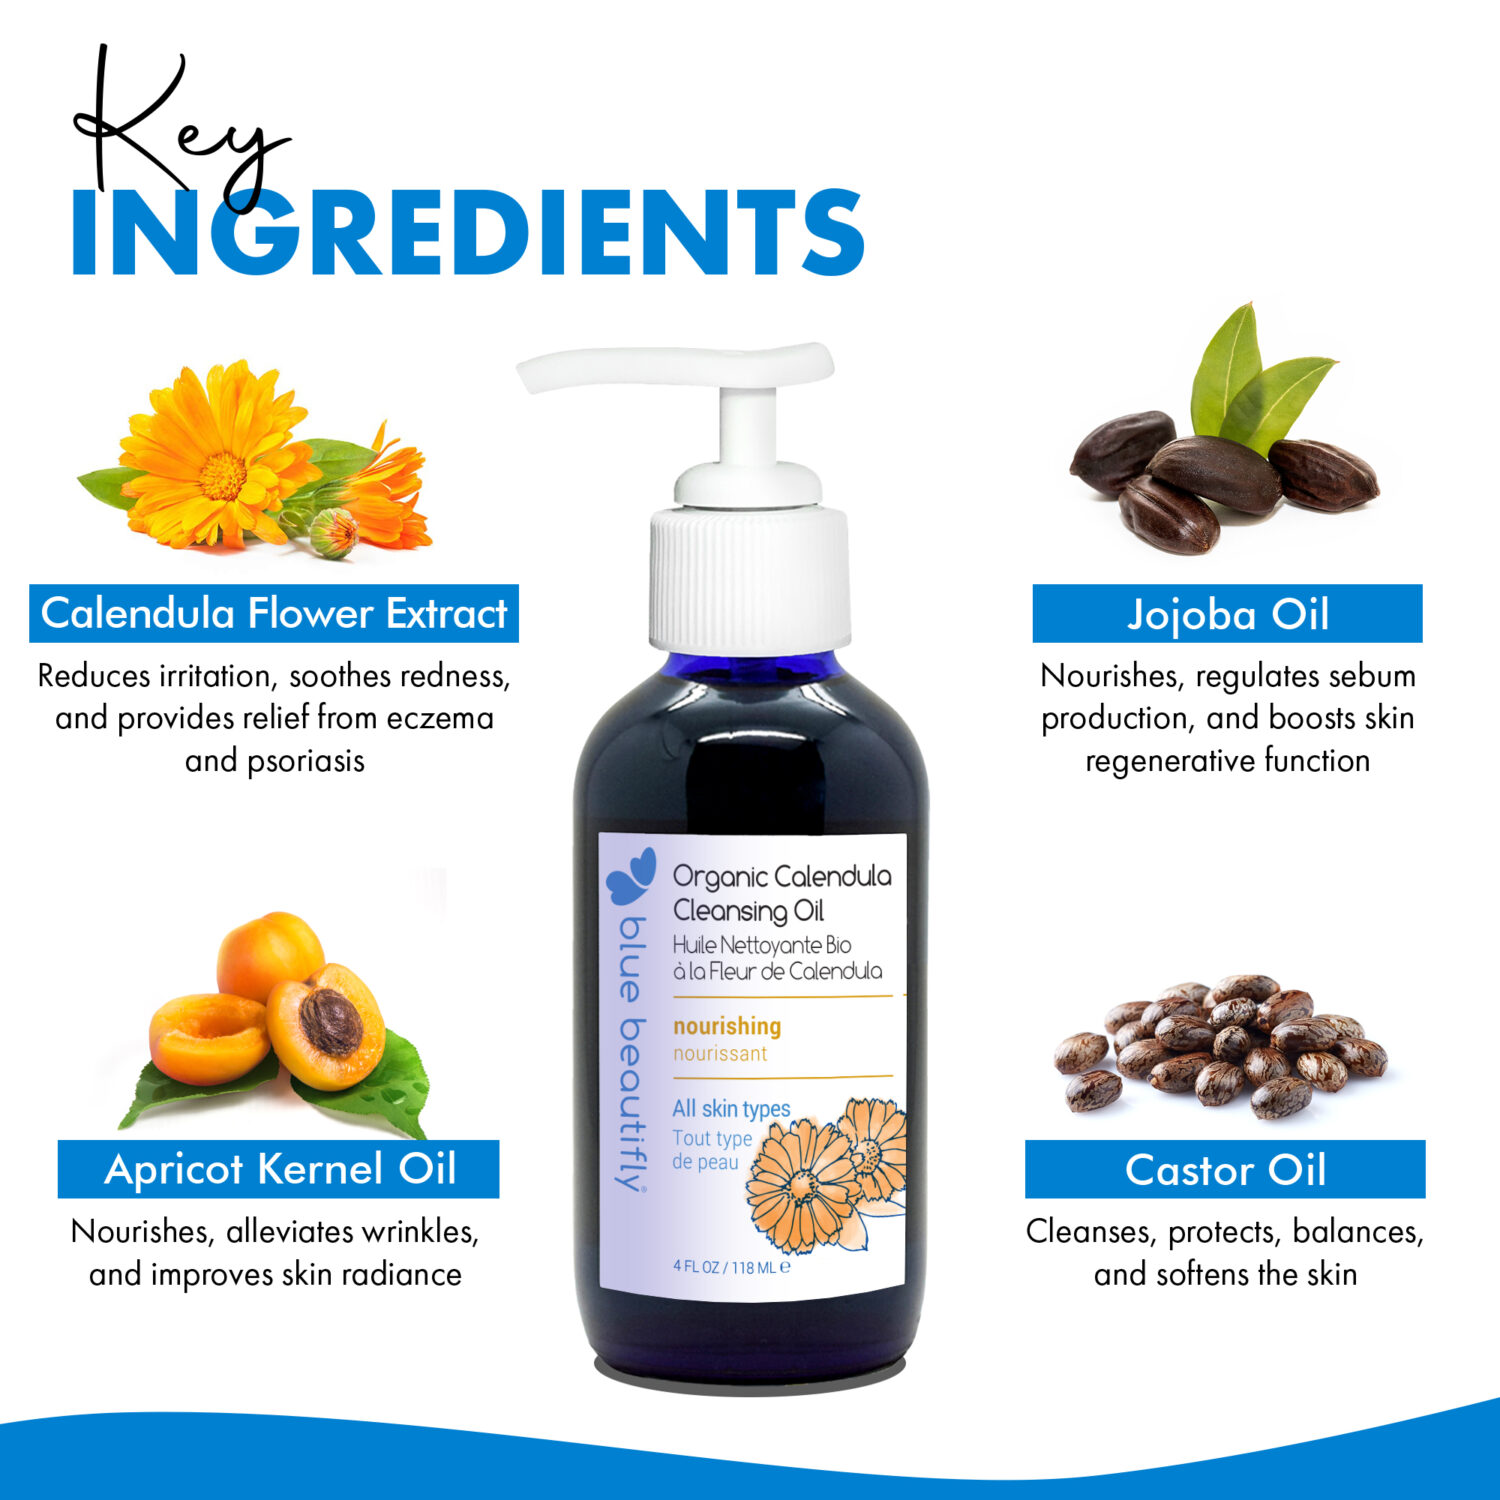 Blue Beautifly Organic Calendula Cleansing Oil key ingredients are calendula flower extract, jojoba oil, apricot kernel oil, castor oil